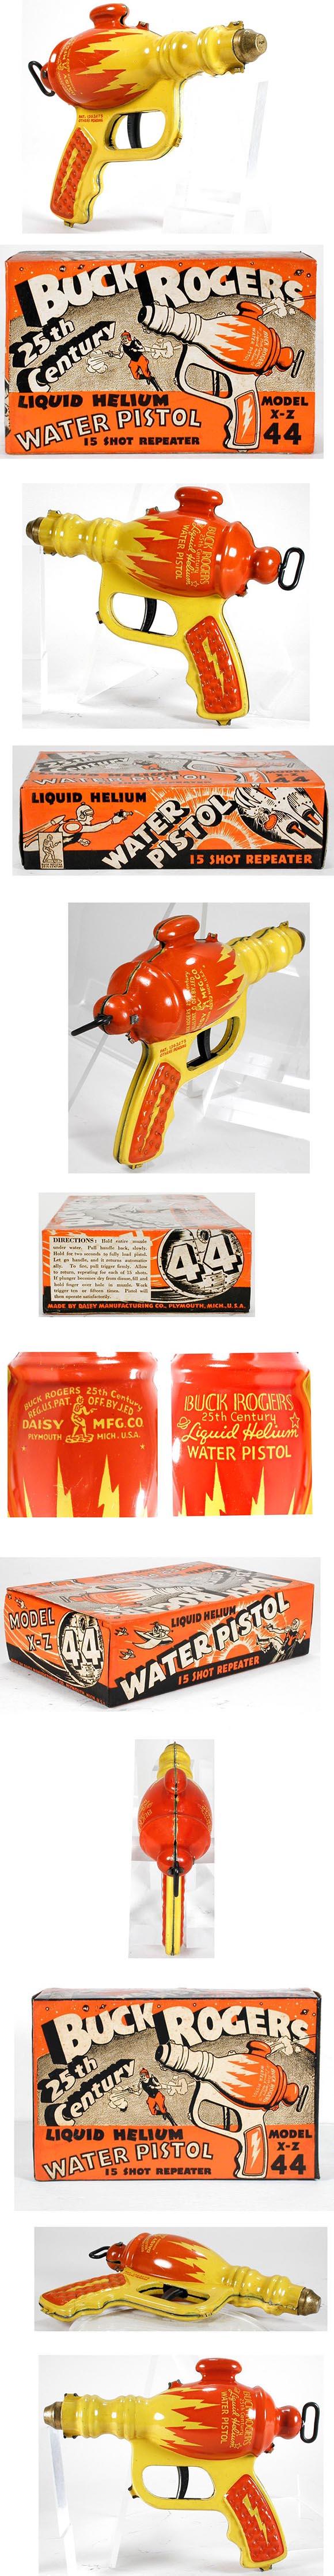 1936 Daisy, Buck Rogers XZ-44 Liquid Helium Pistol in Original Box